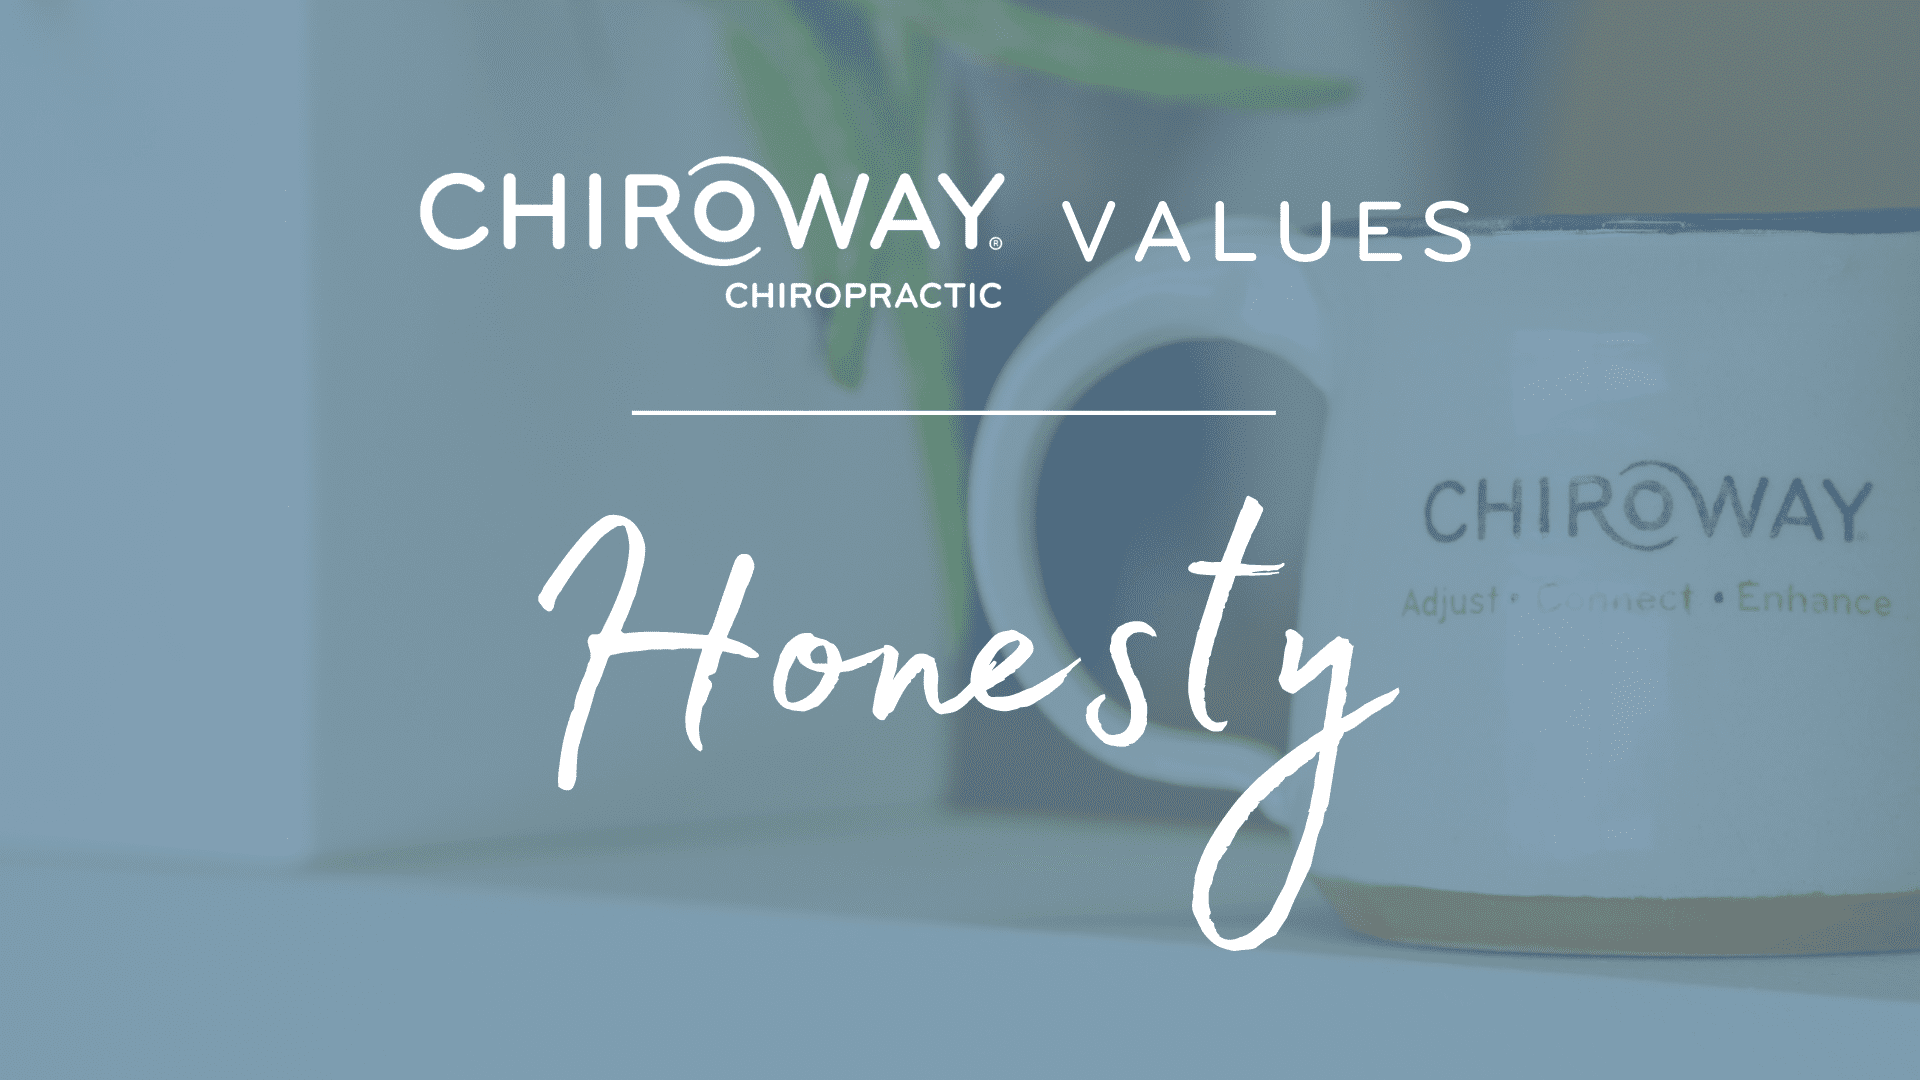 ChiroWay Core Values - Honesty